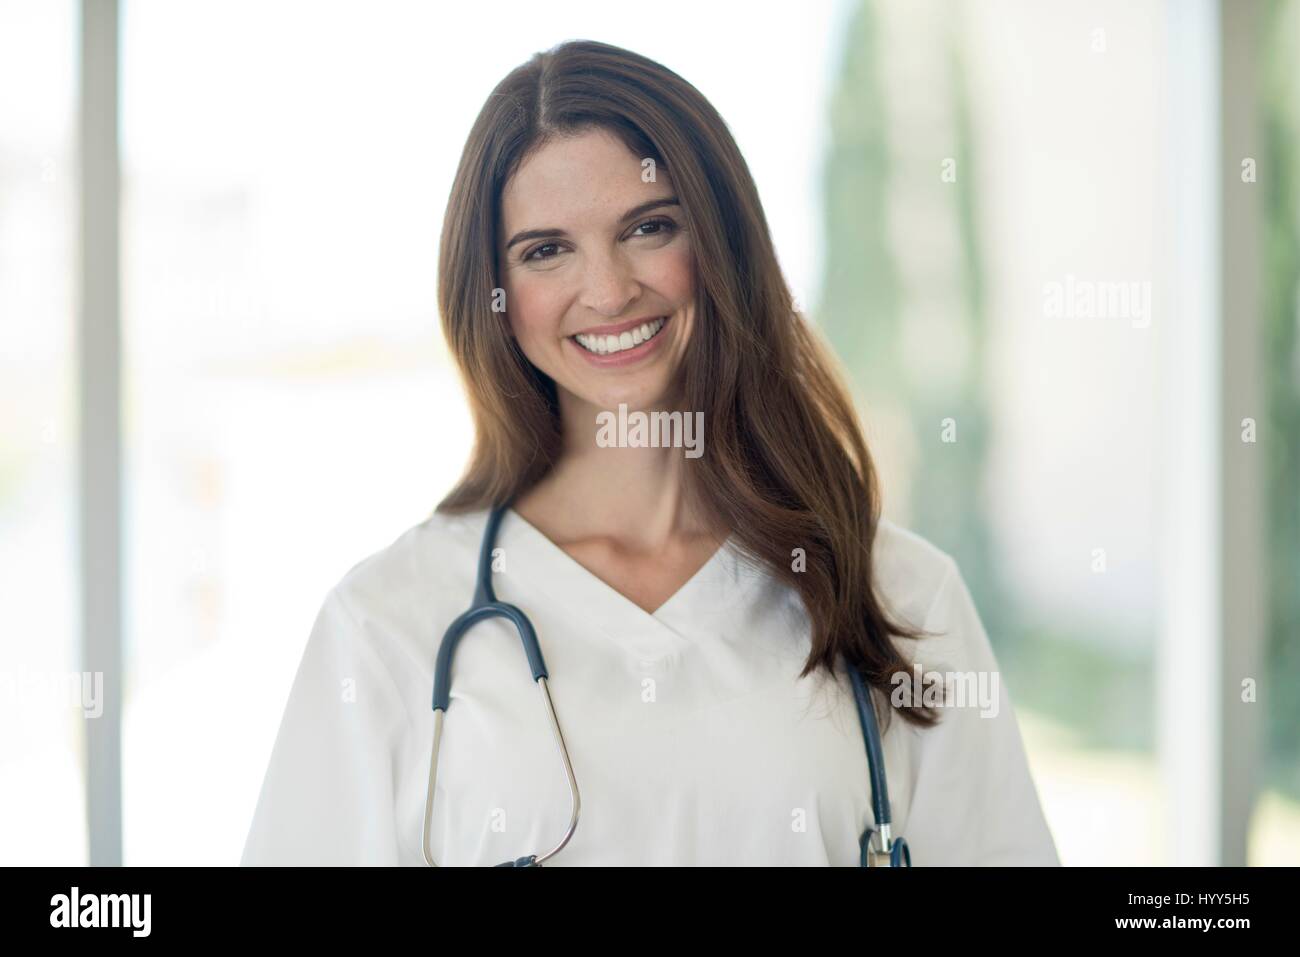 Female medical professional smiling towards camera, portrait. Stock Photo